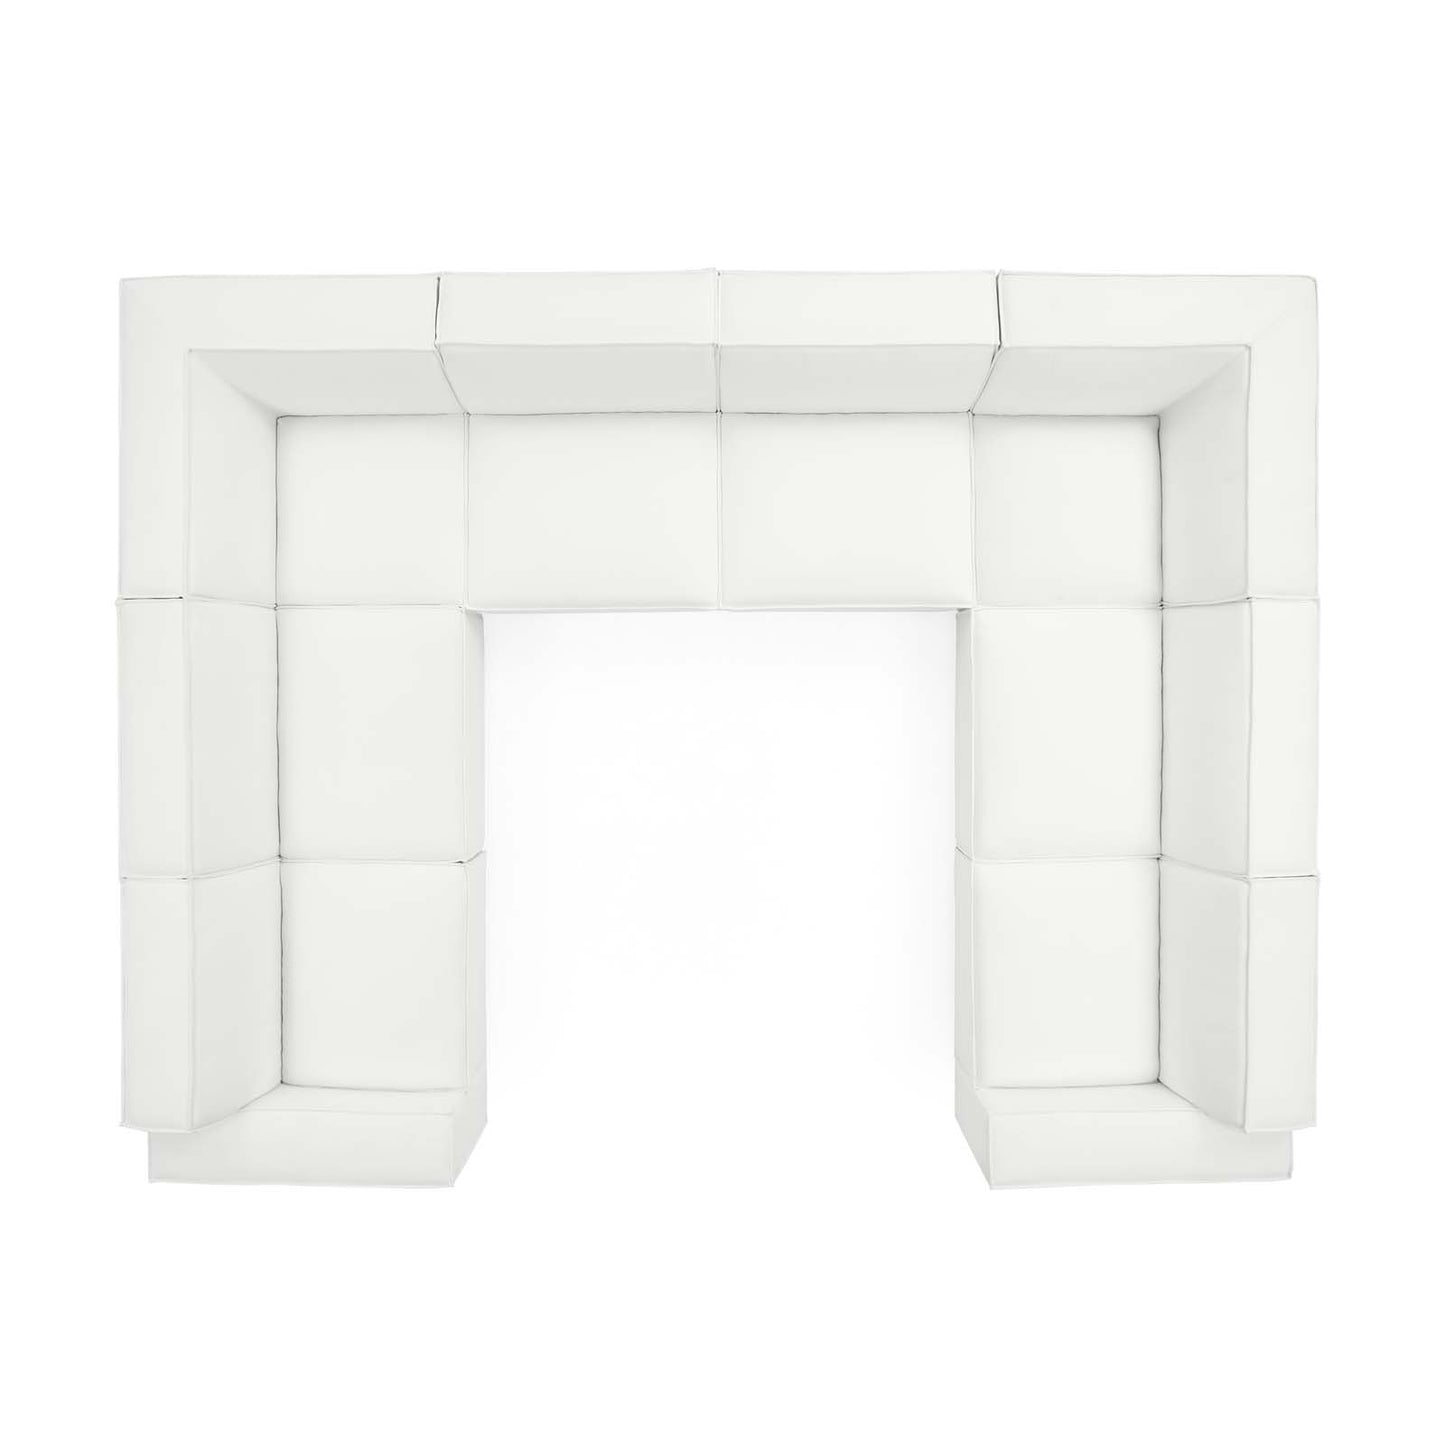 Restore 8-Piece Sectional Sofa White EEI-4121-WHI